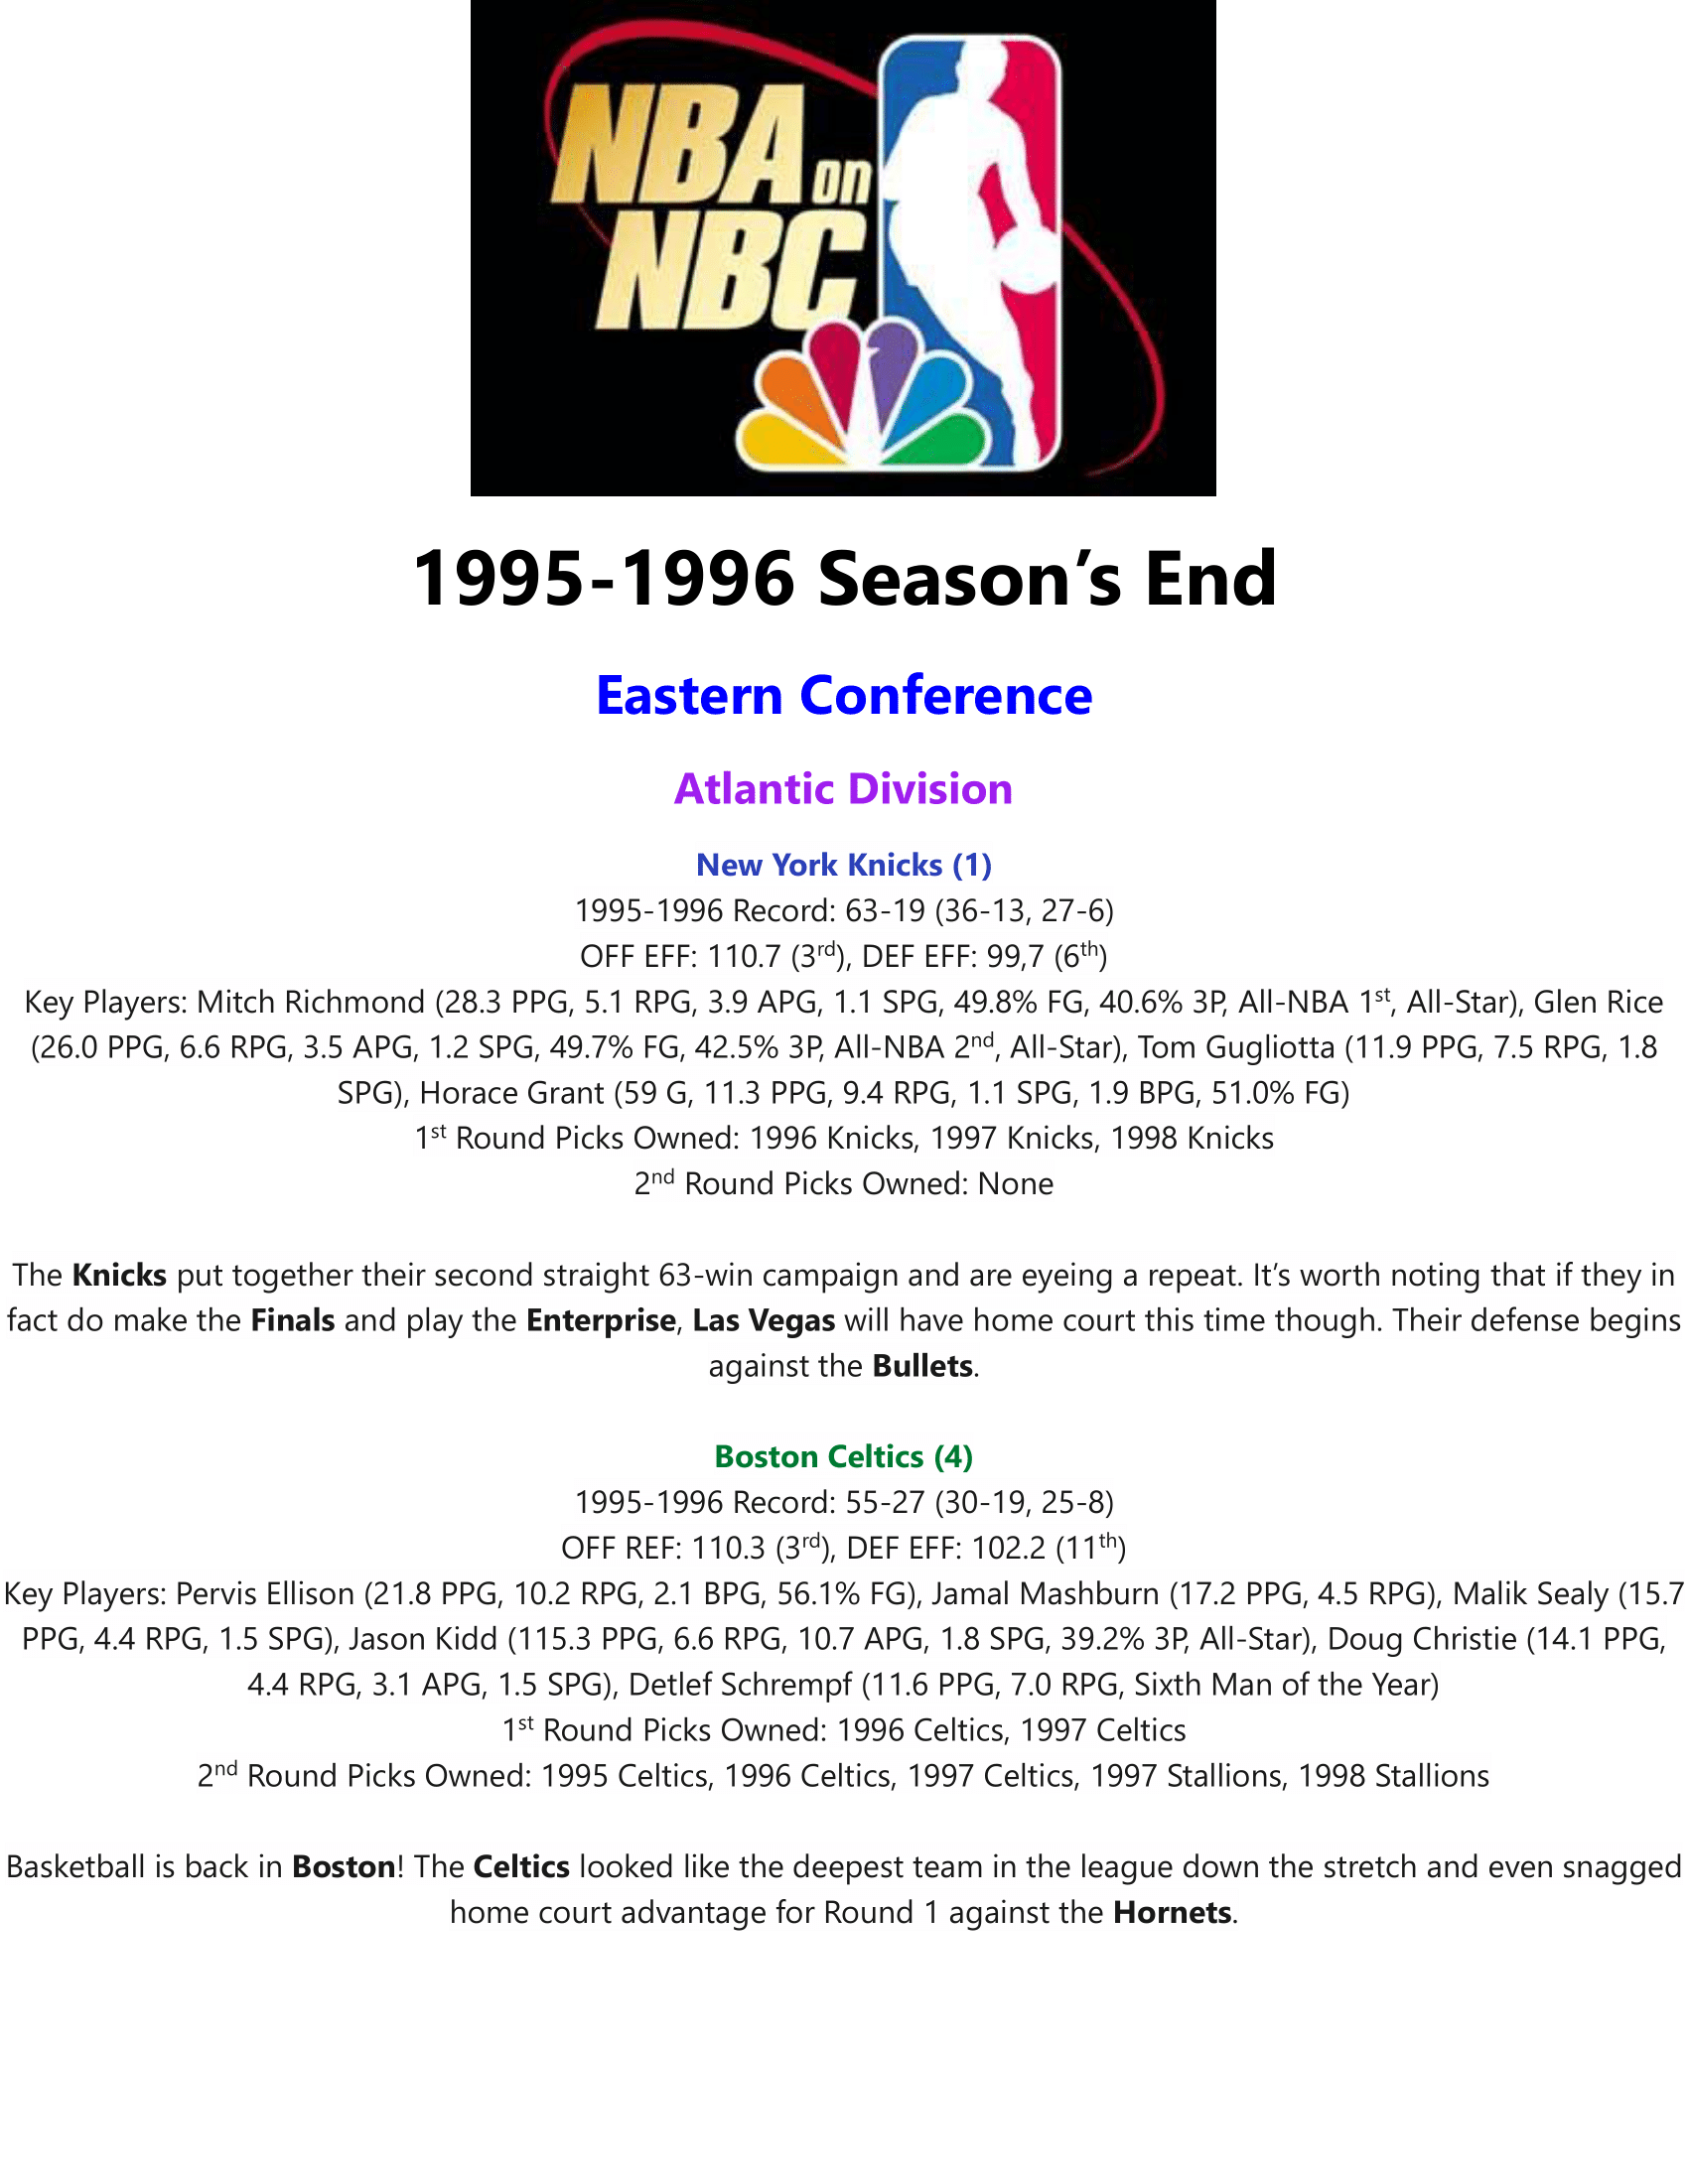 95-96-Part-2-Seasons-End-01.png